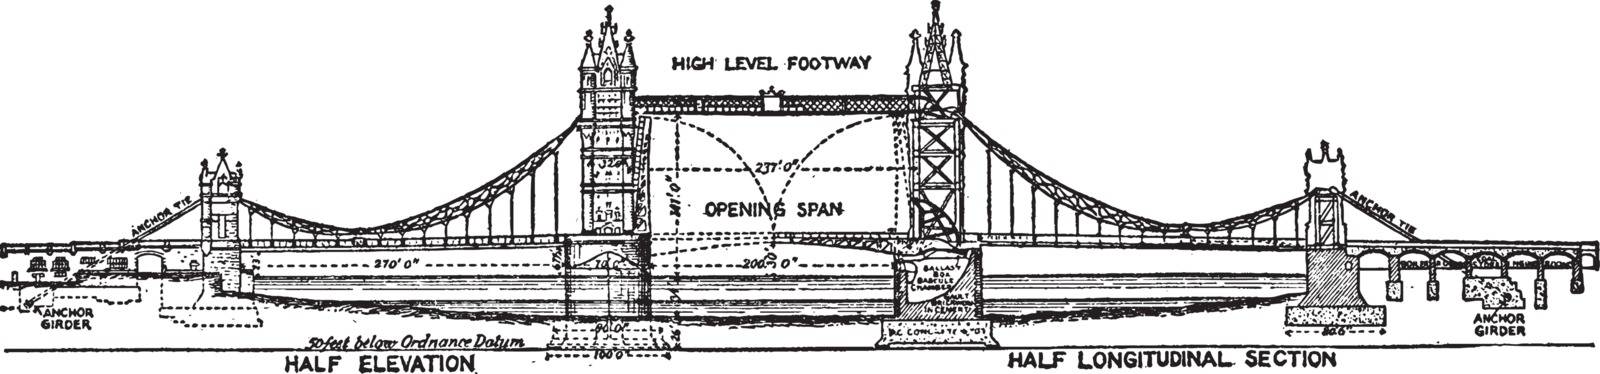 Tower Bridge, vintage illustration. by Morphart